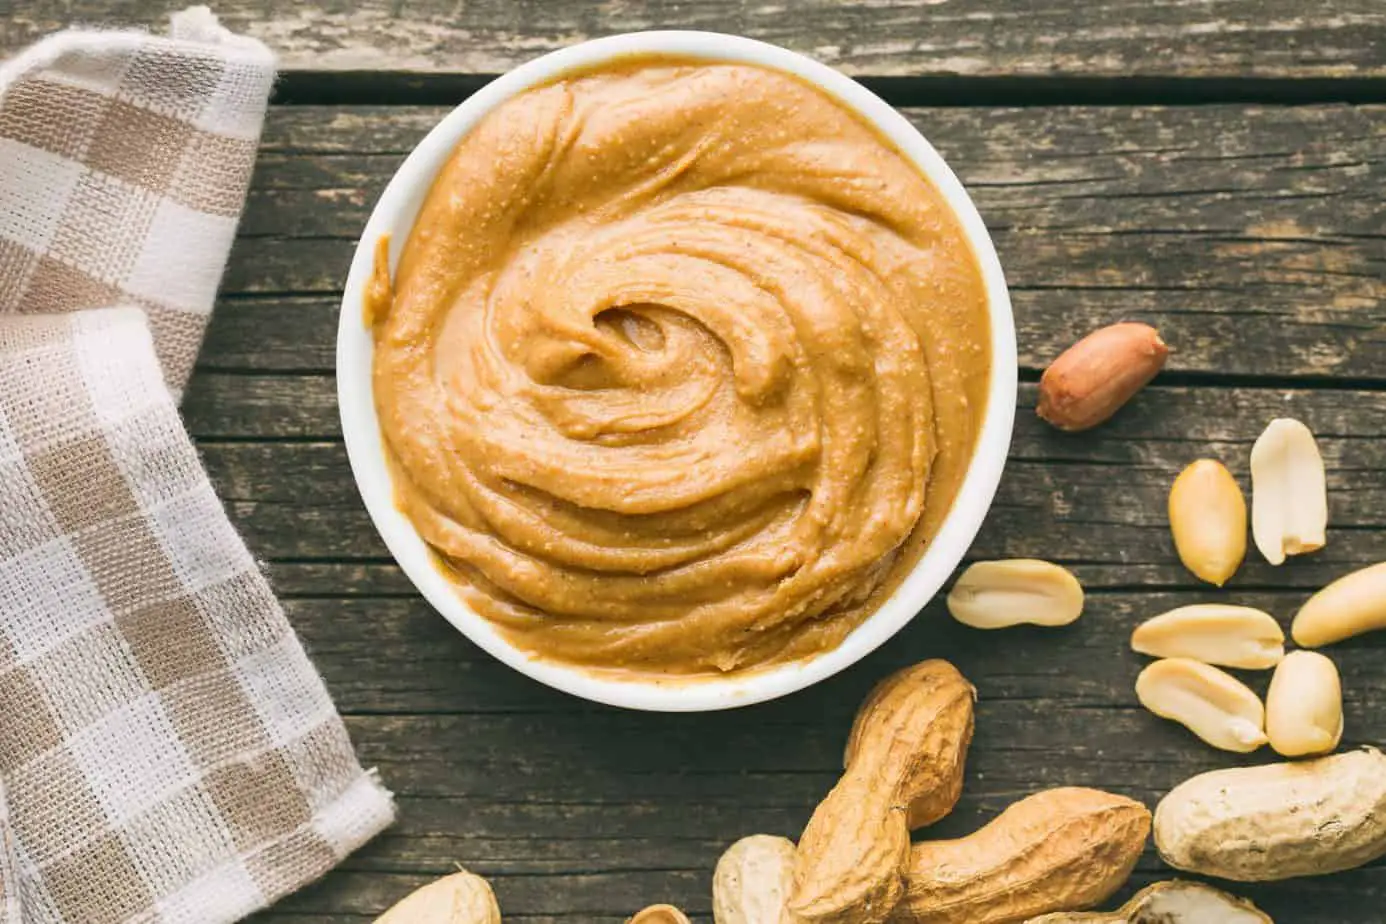 Is Jif Peanut butter vegan?